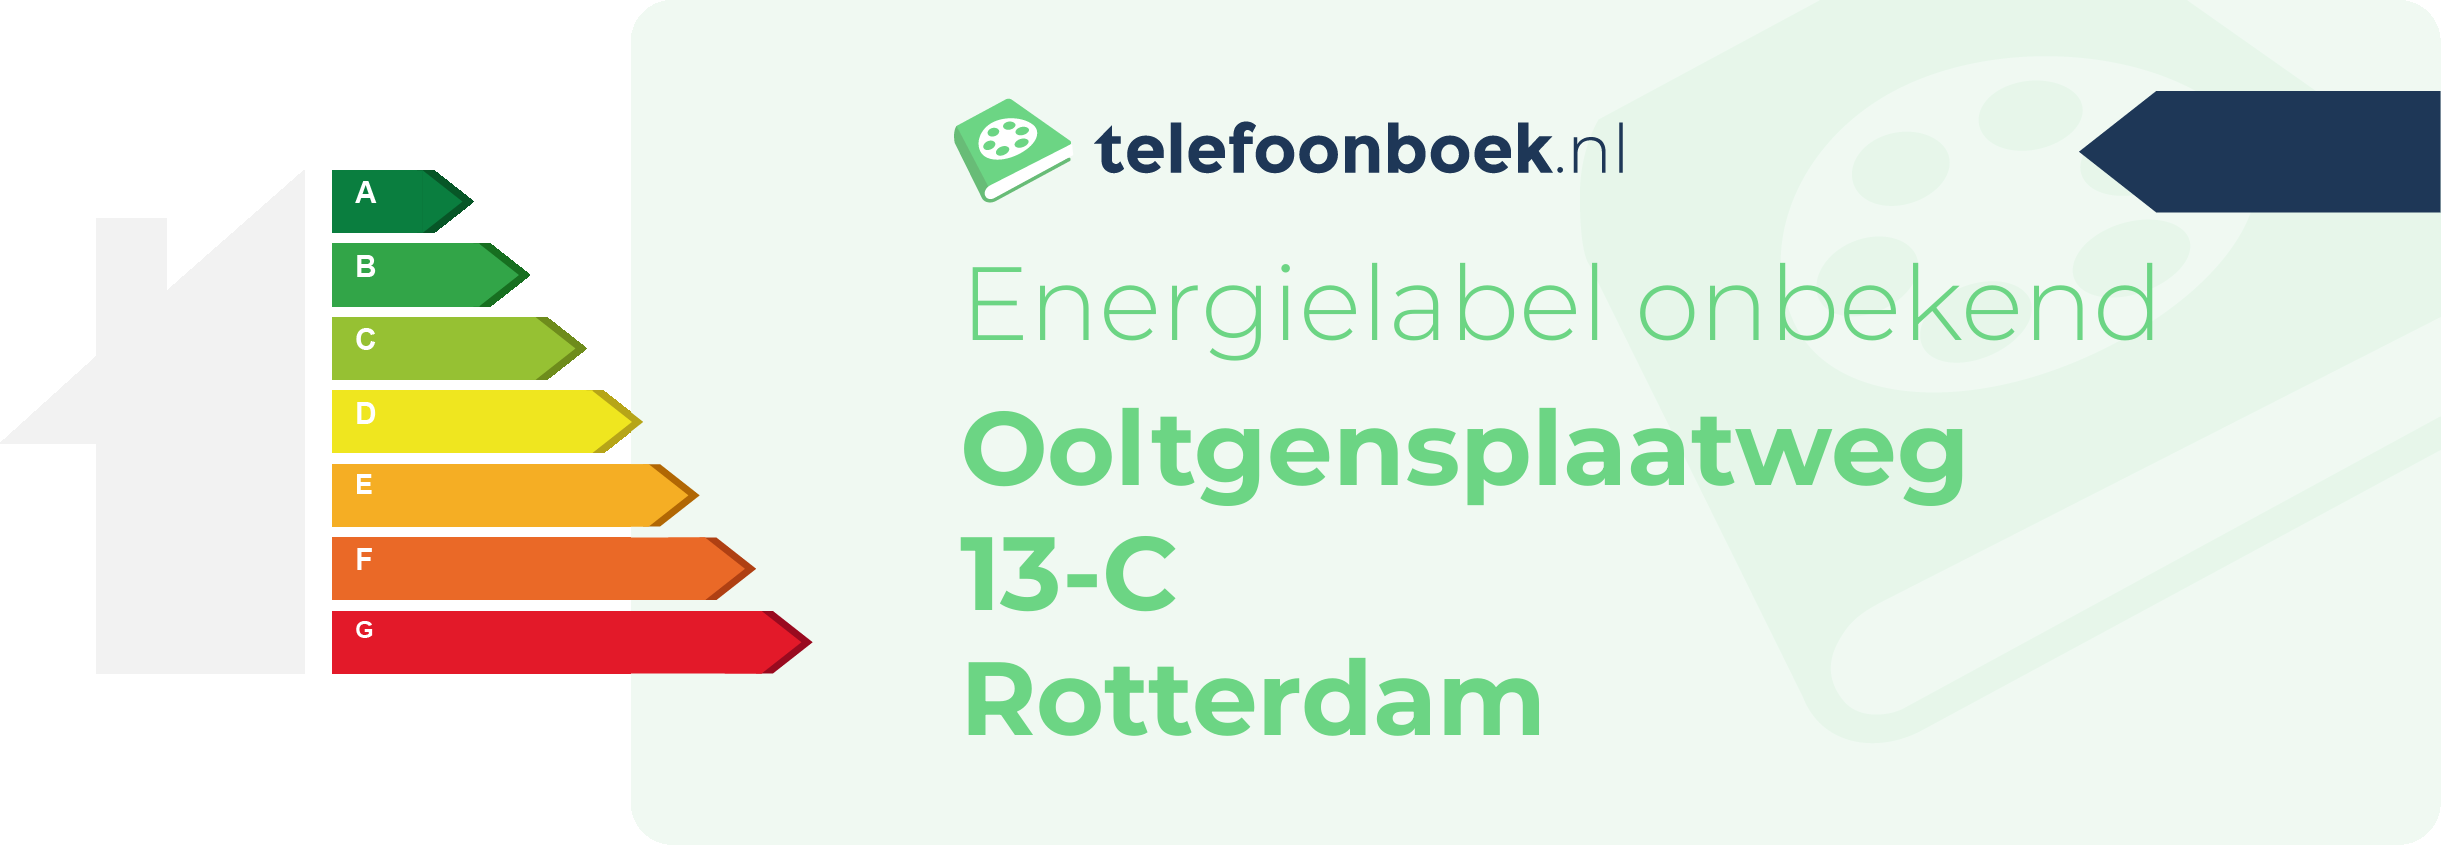 Energielabel Ooltgensplaatweg 13-C Rotterdam